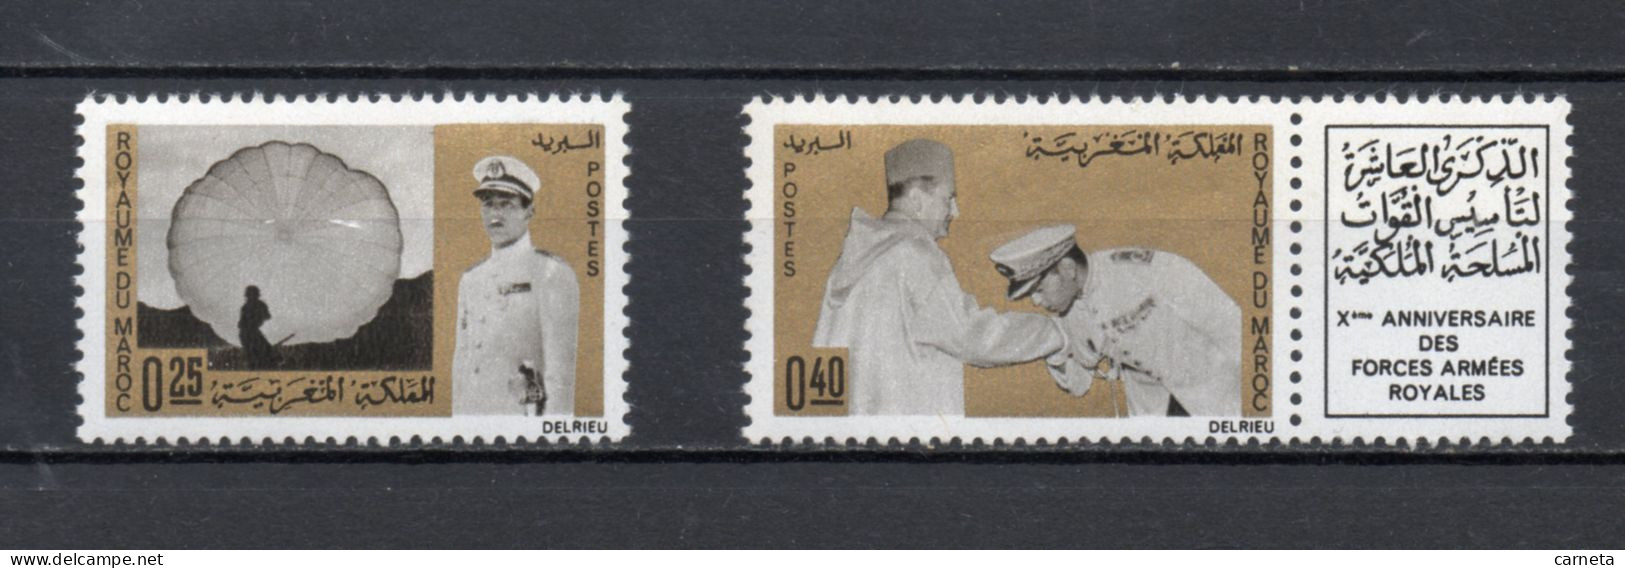 MAROC N°  504 + 505    NEUFS SANS CHARNIERE  COTE 1.60€   ROI HASSAN II ARMEE - Morocco (1956-...)